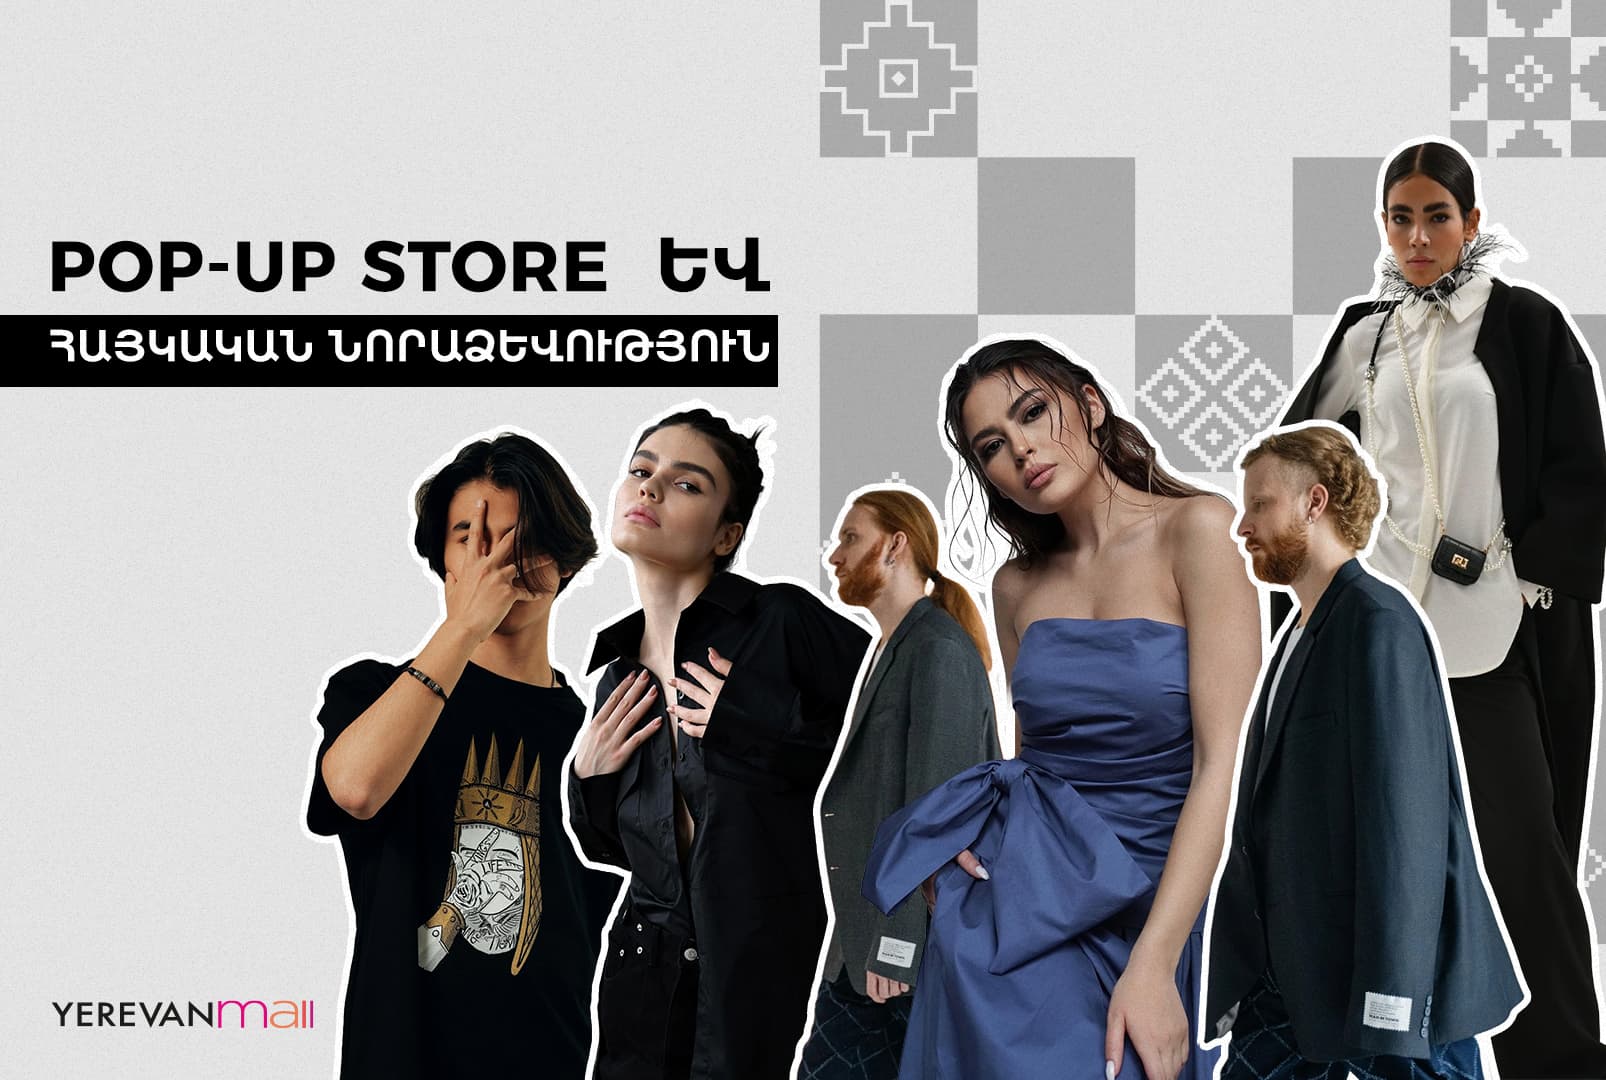 Pop-Up Store-ը Երևան Մոլում. բացահայտիր հայկական նորաձևության զարգացումը 